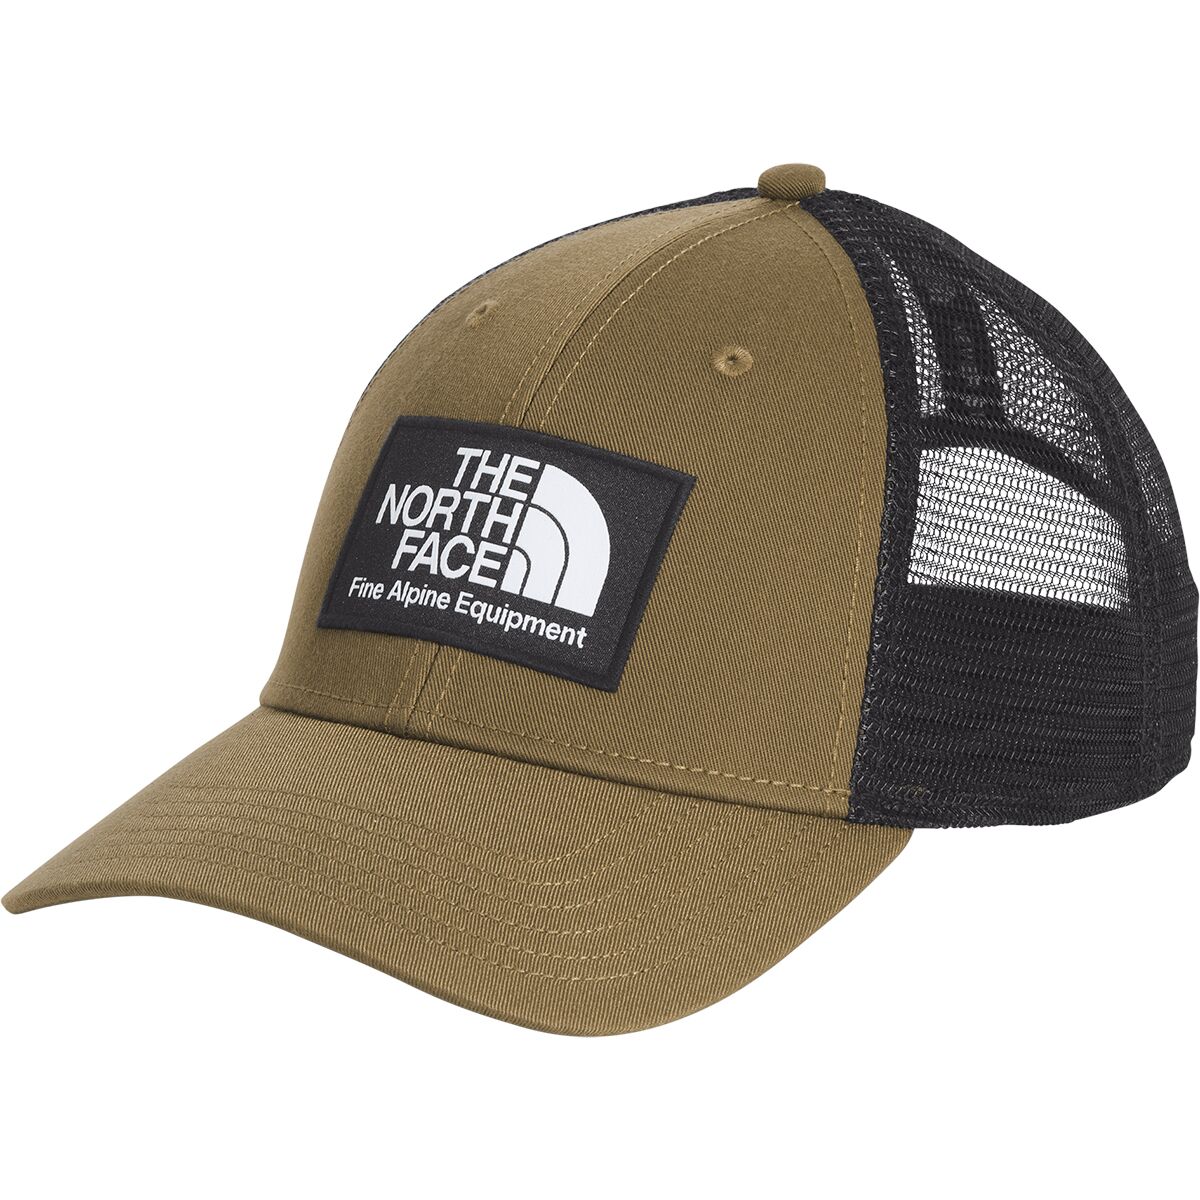 The North Face Mudder Trucker Hat - Men's